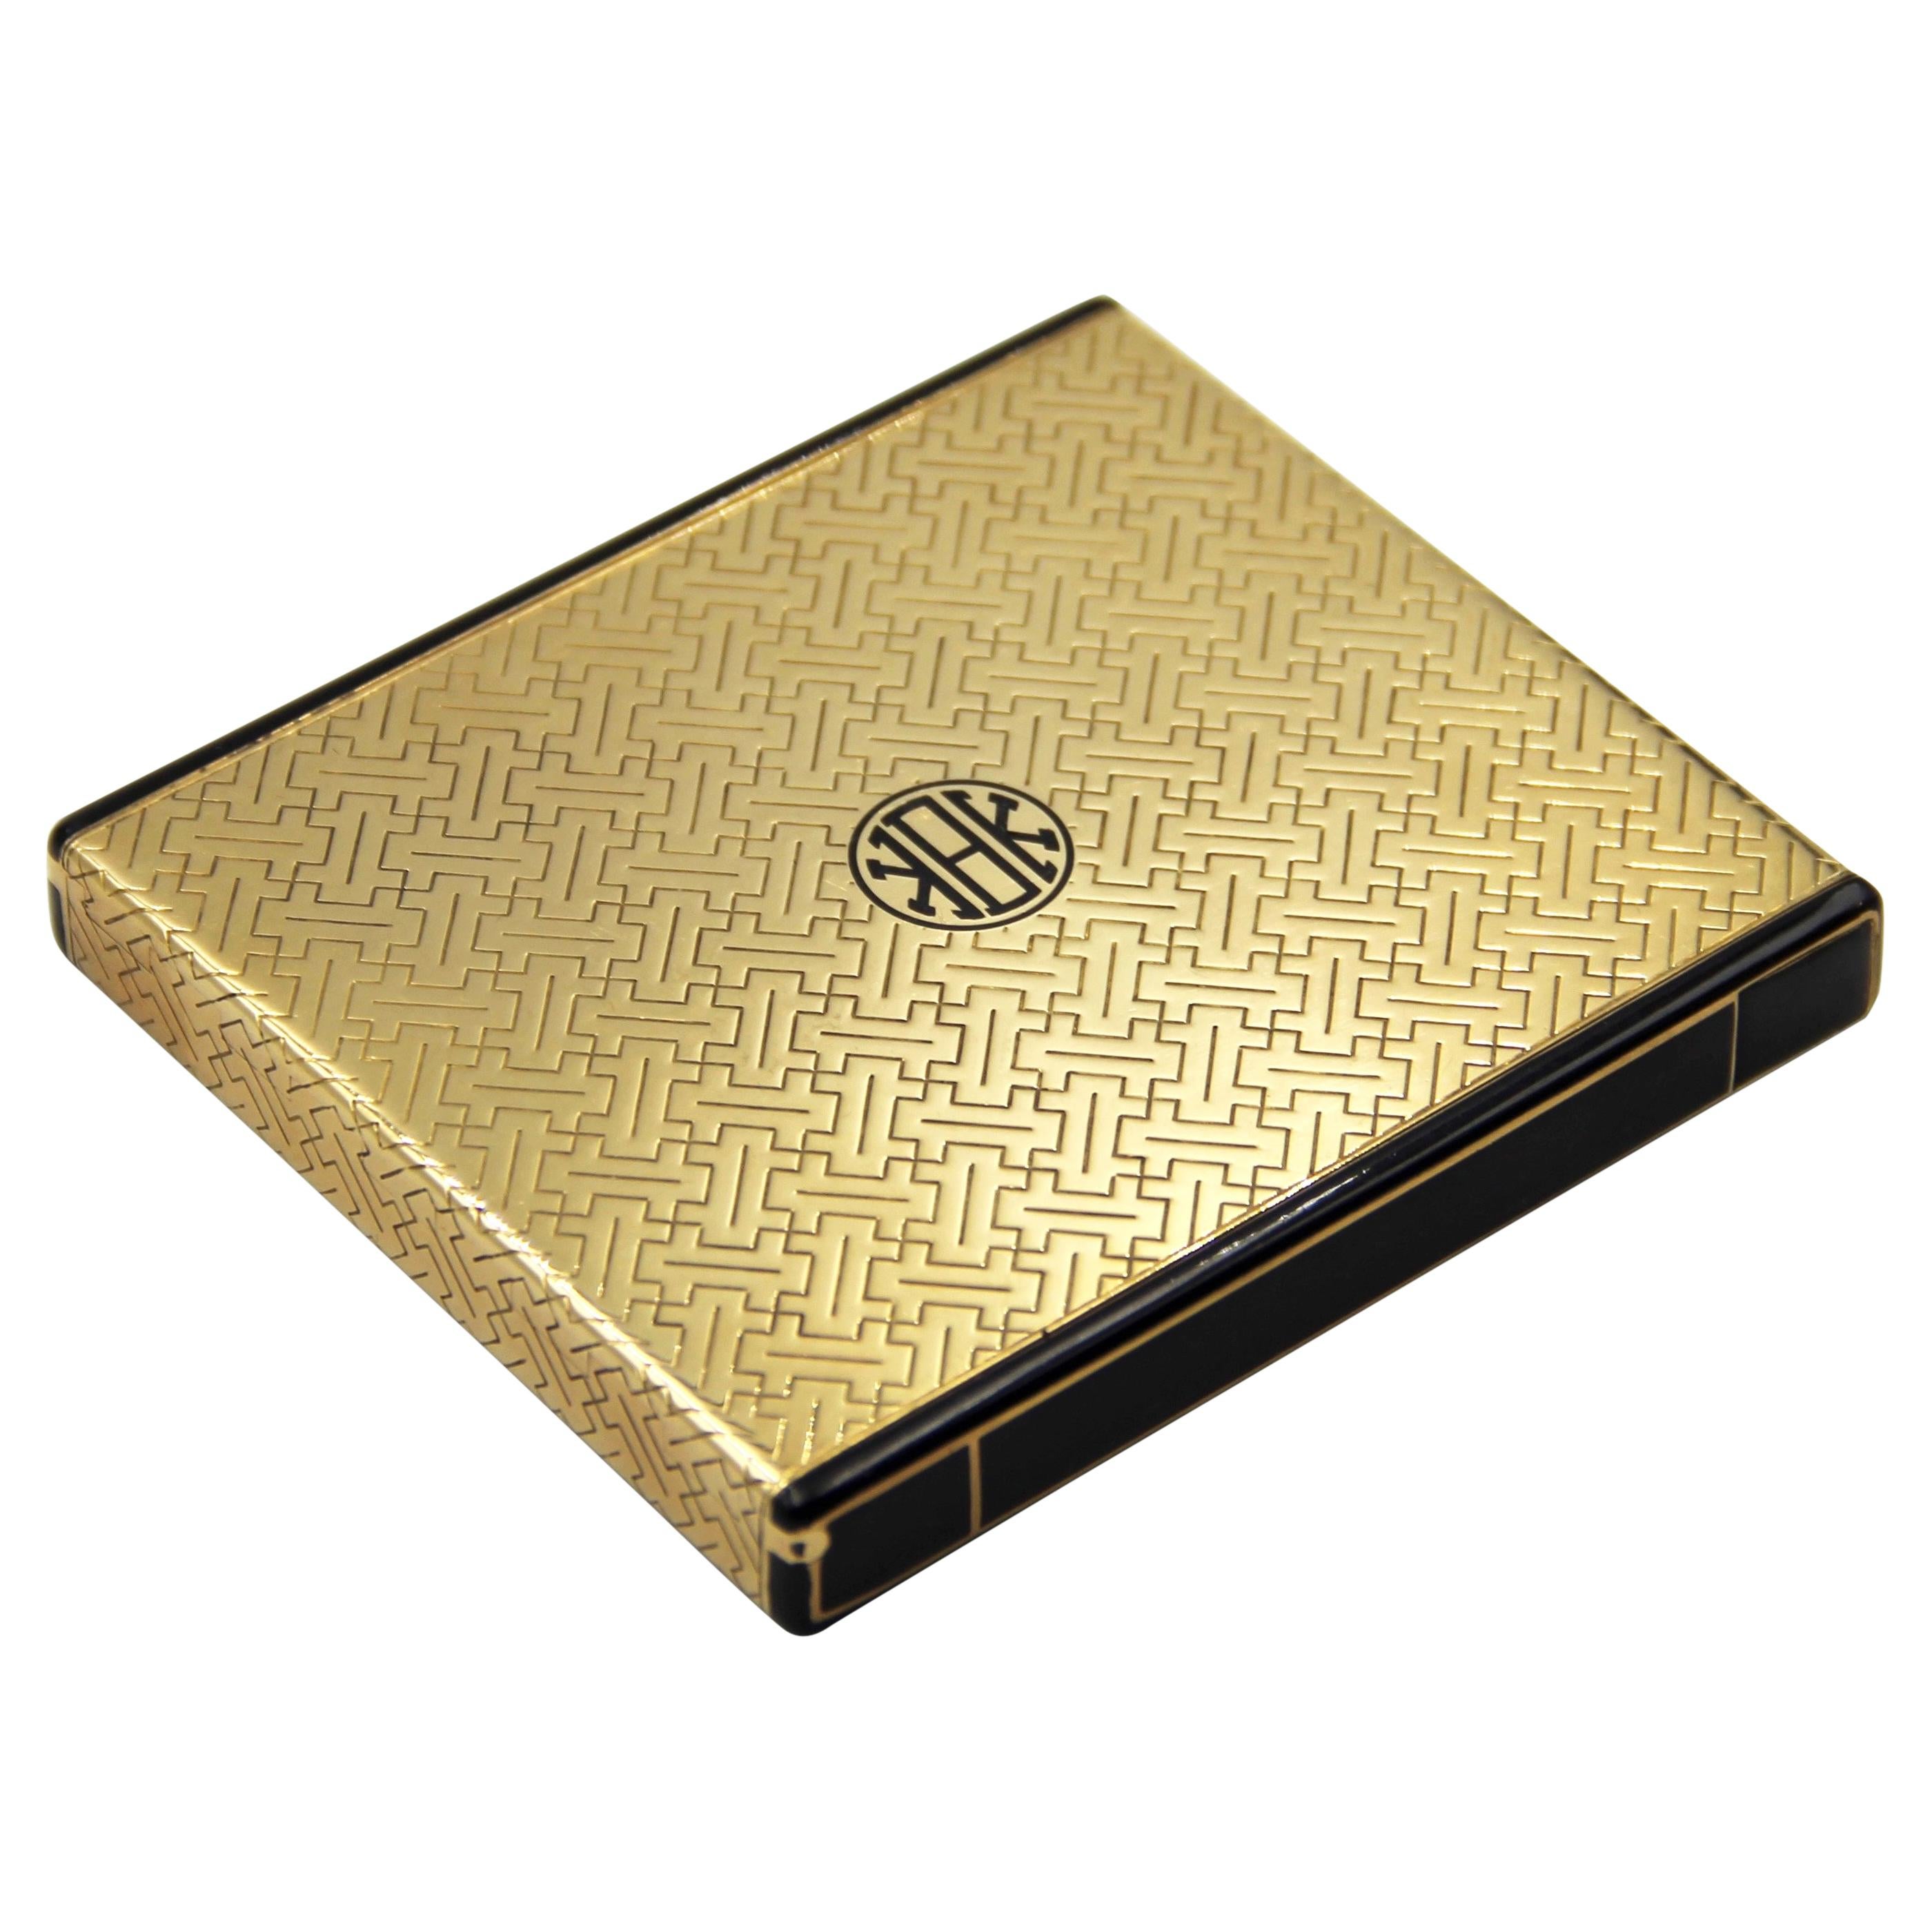 Cartier 18k Gold Enamel Box For Sale